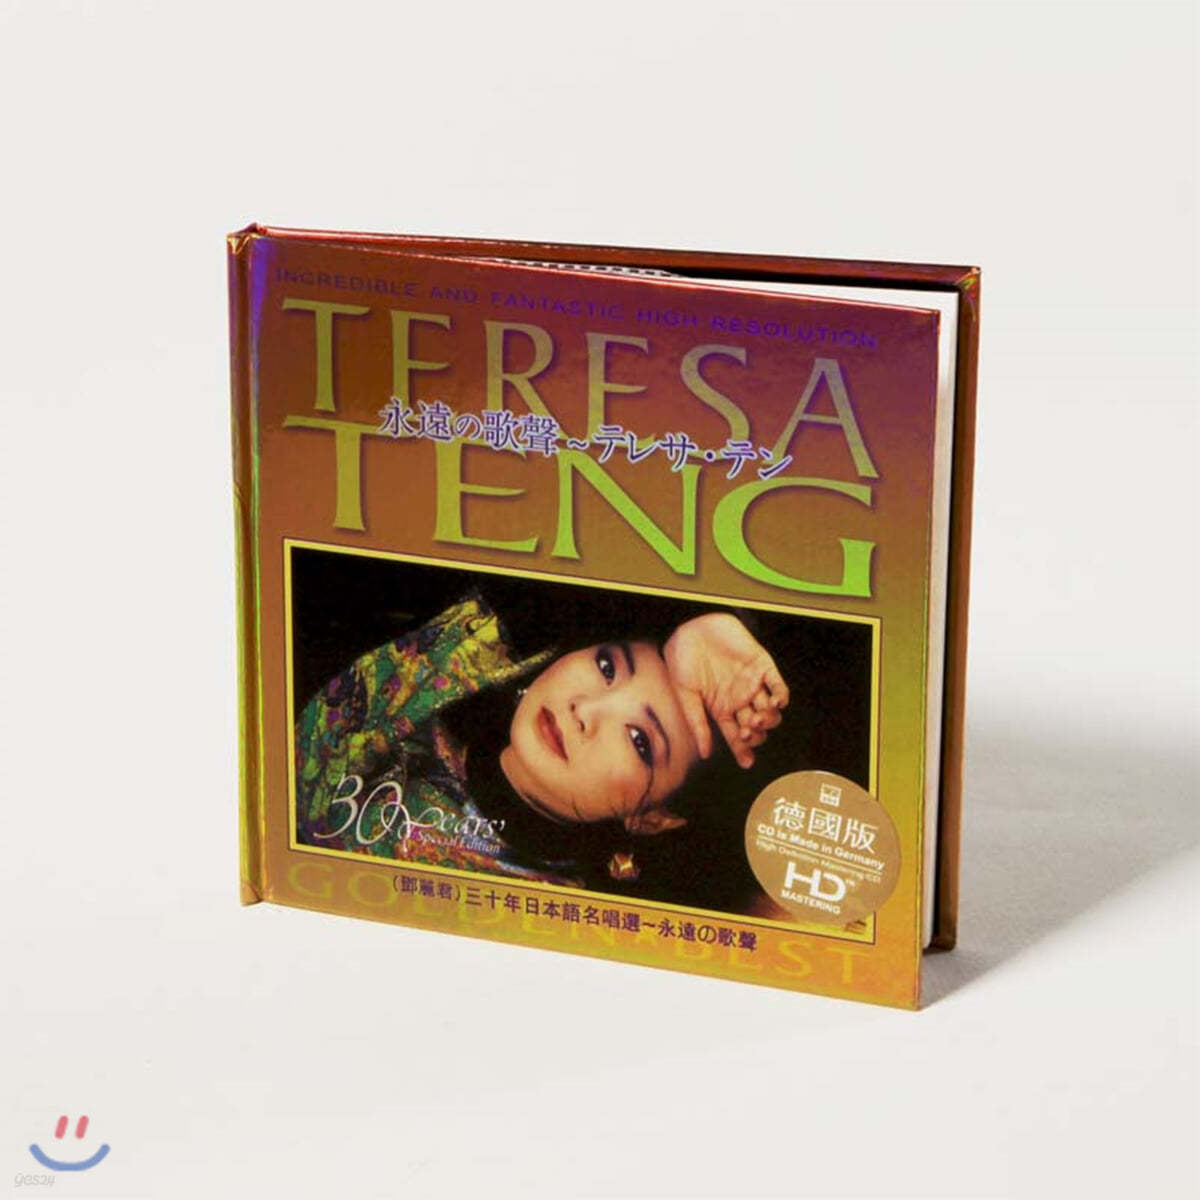 Teresa Teng - 30 Years Japanese Special Edition 등려군 데뷔 30주년 기념 앨범 [일본어]